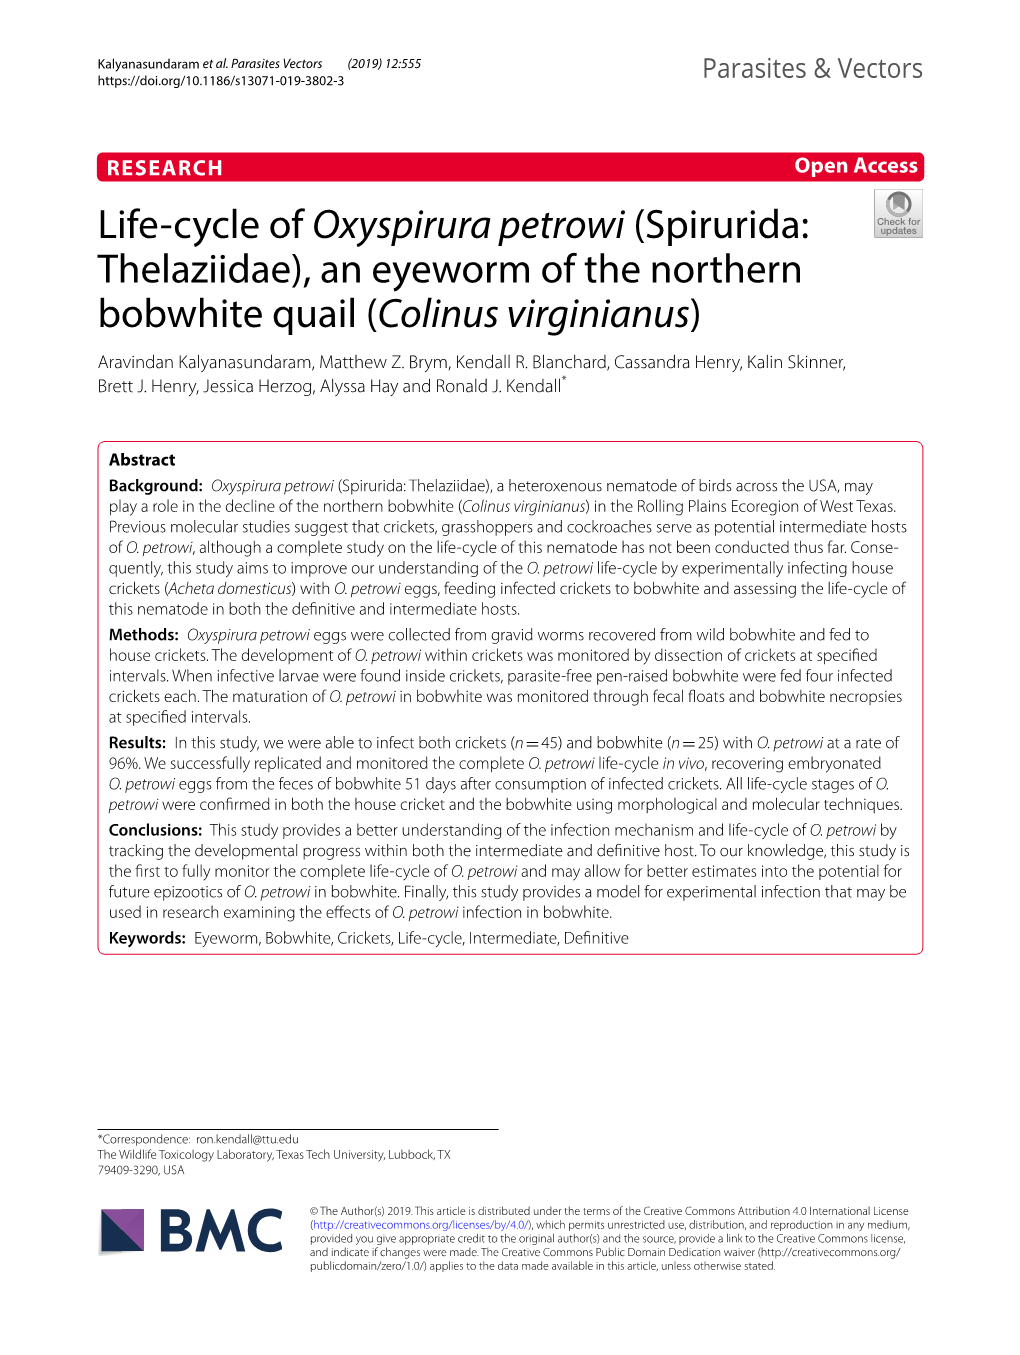 Life-Cycle of Oxyspirura Petrowi (Spirurida: Thelaziidae), An